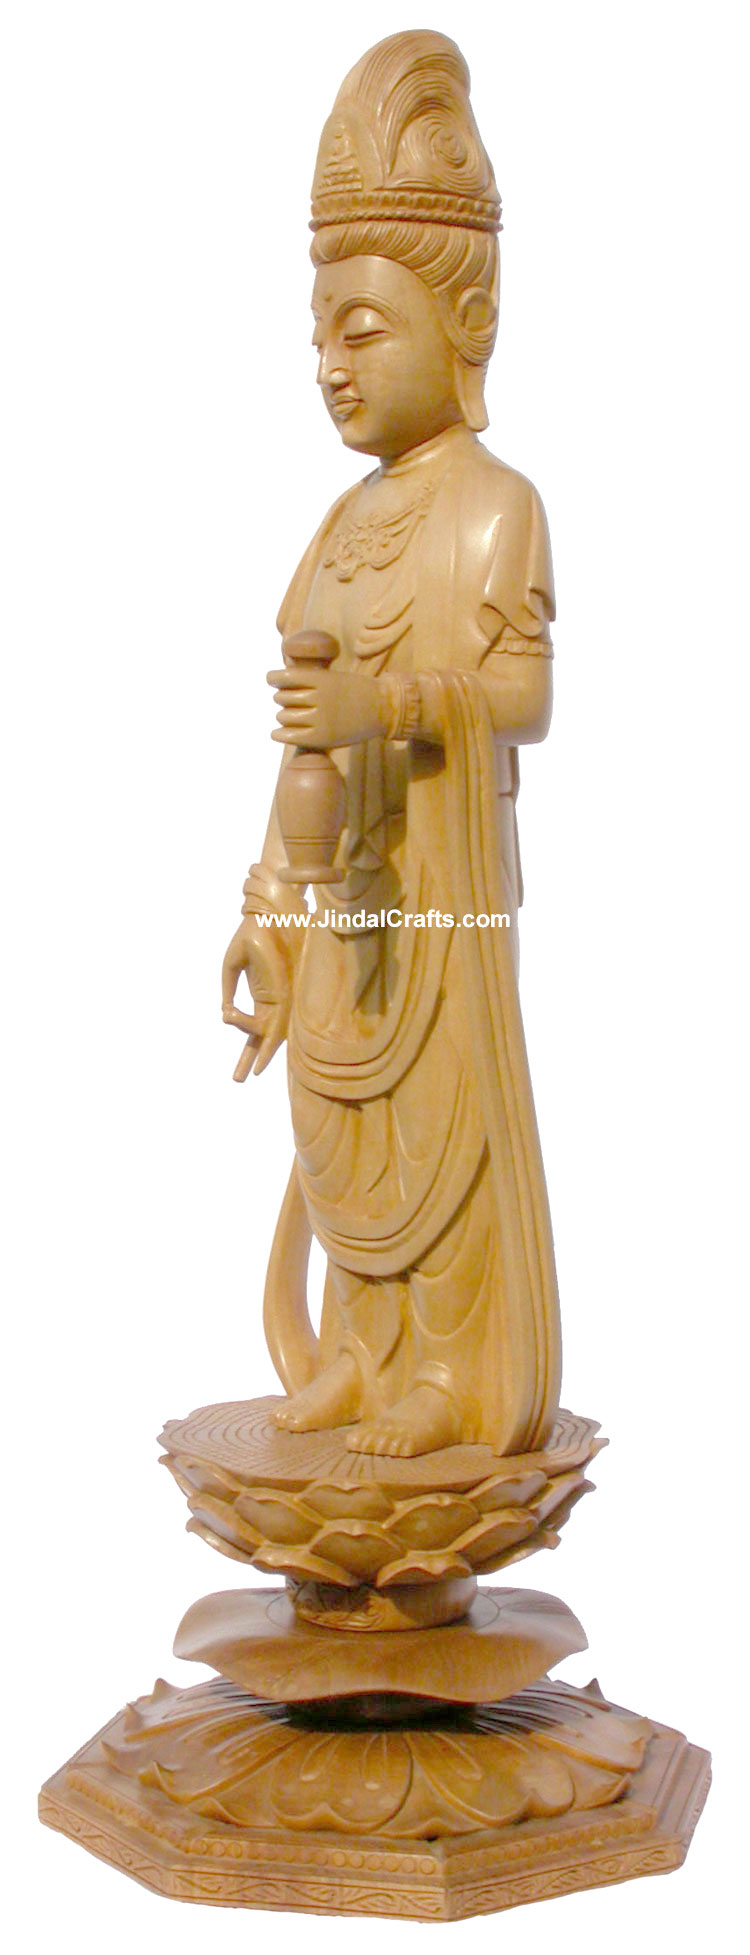 Handmade Wood Sculpture Buddha on Flower Lotus Indian